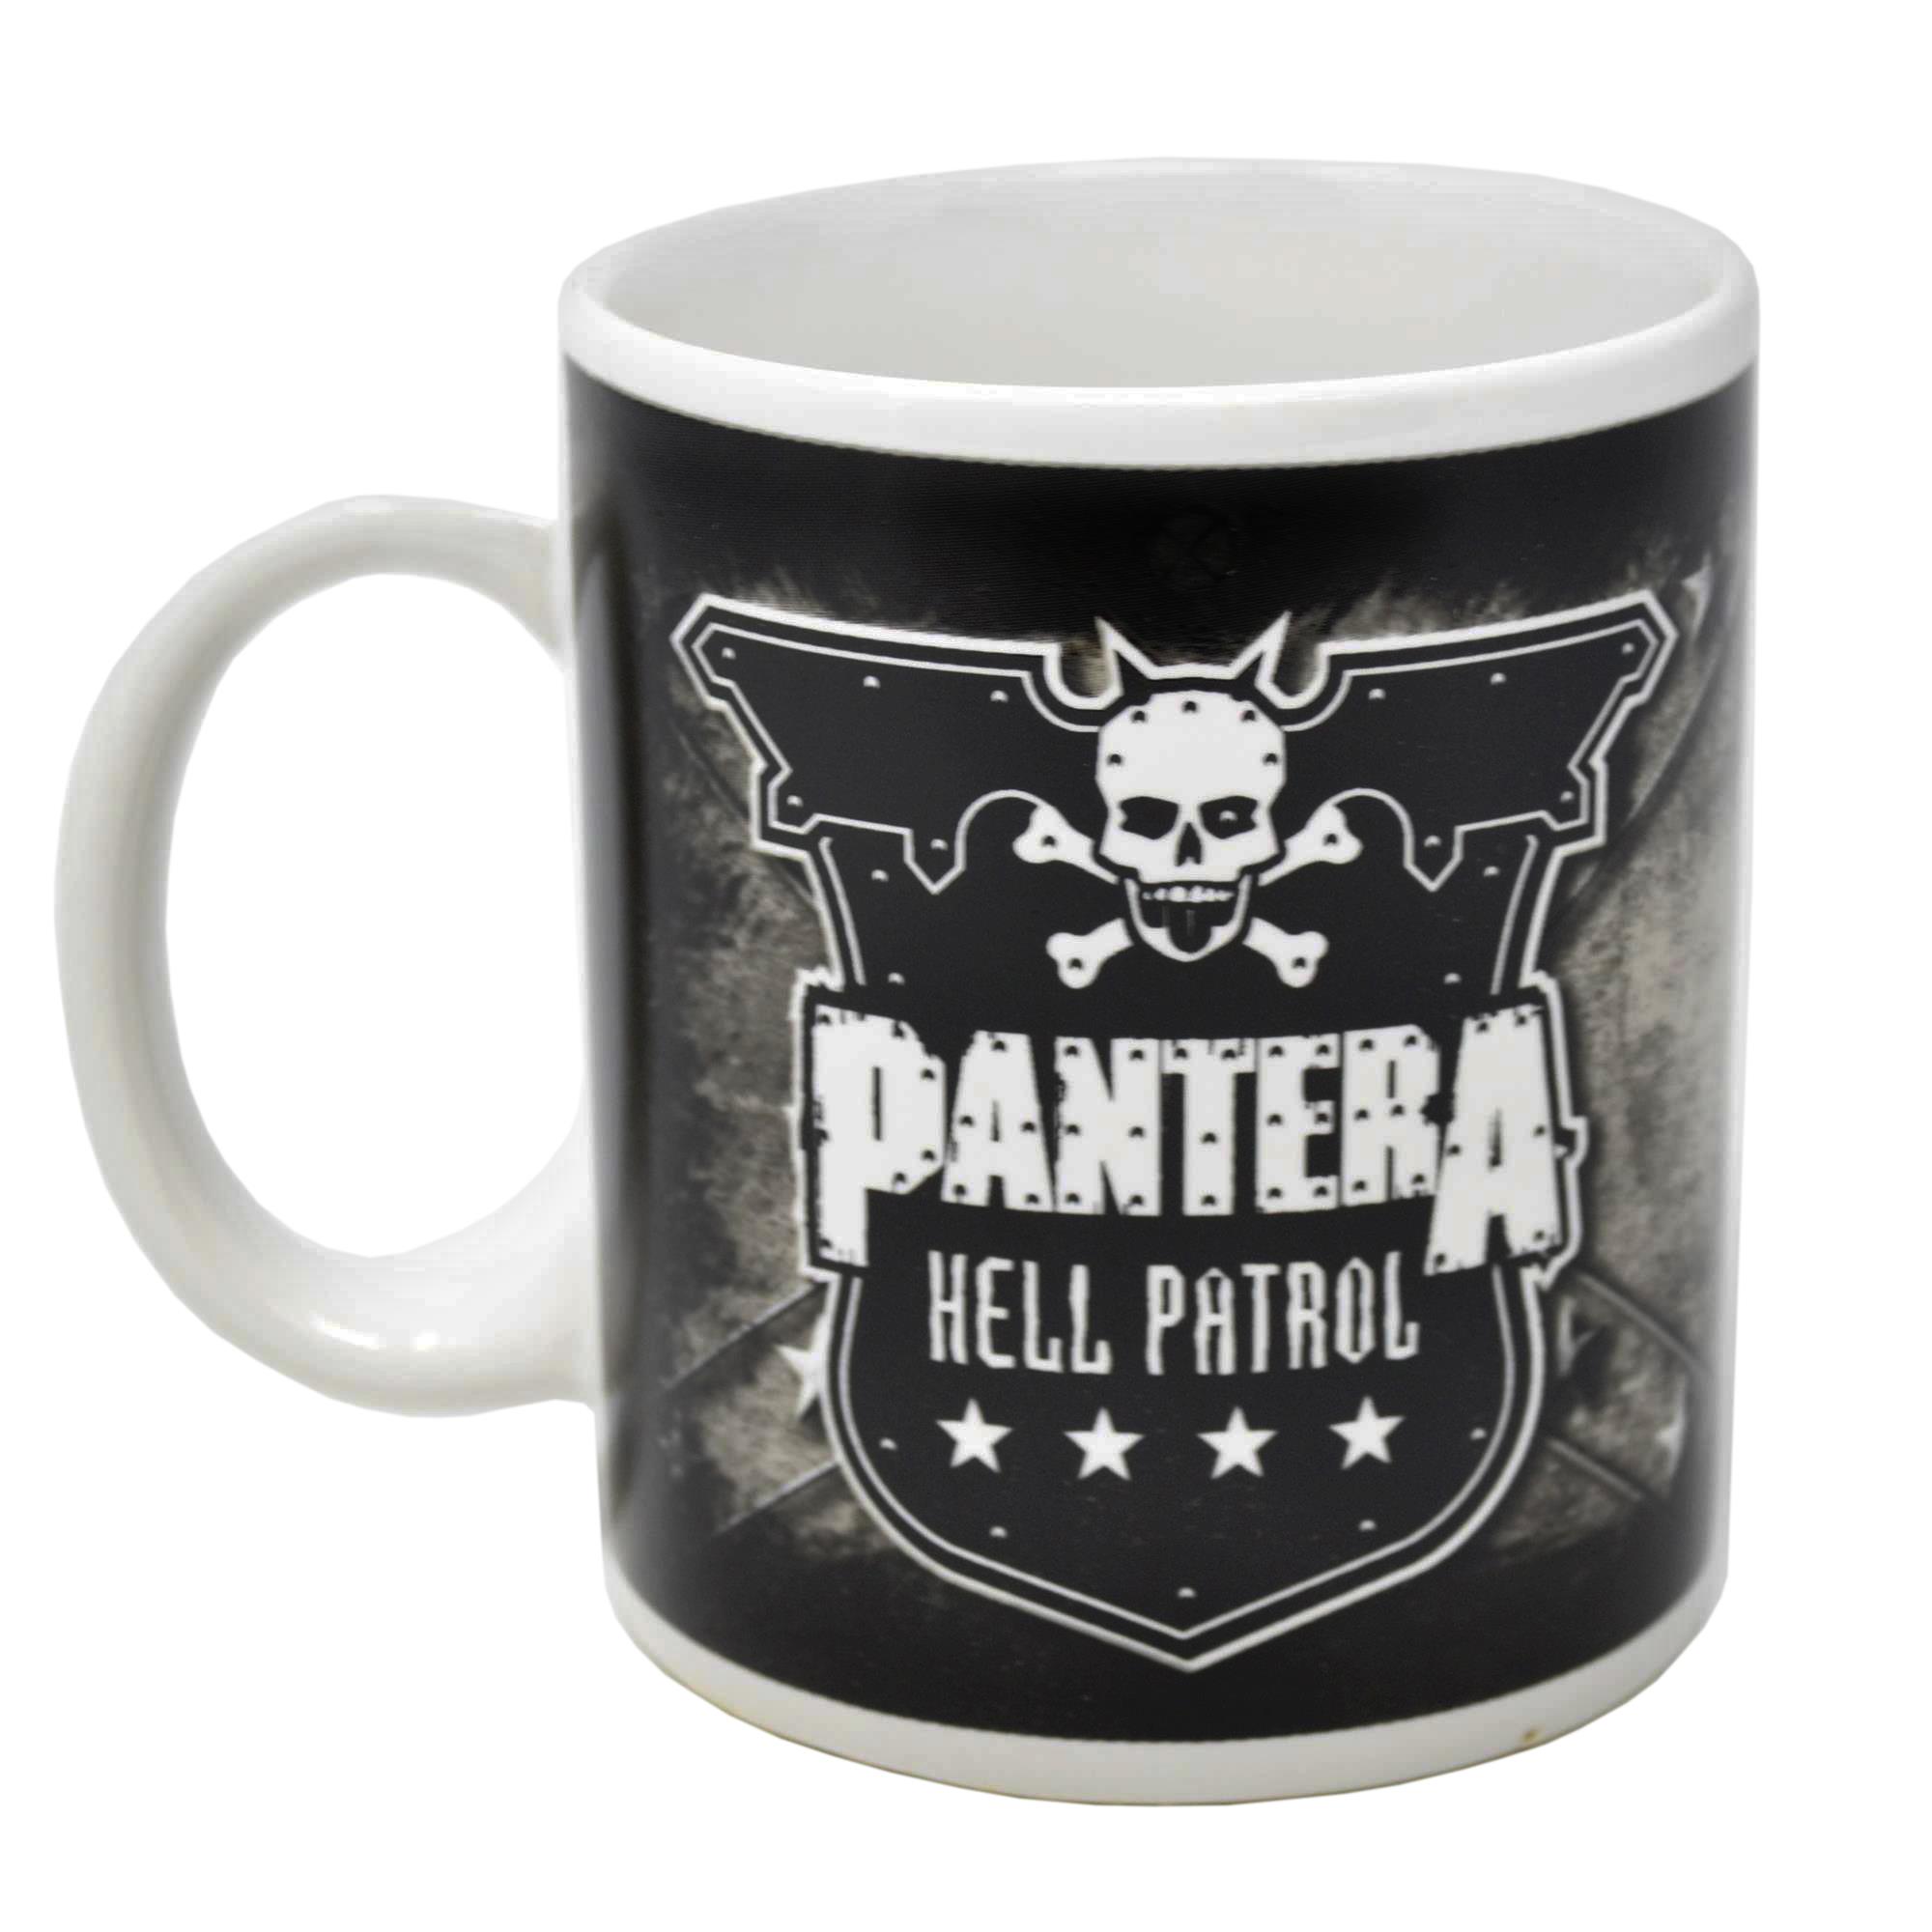 Hell Patrol Mug